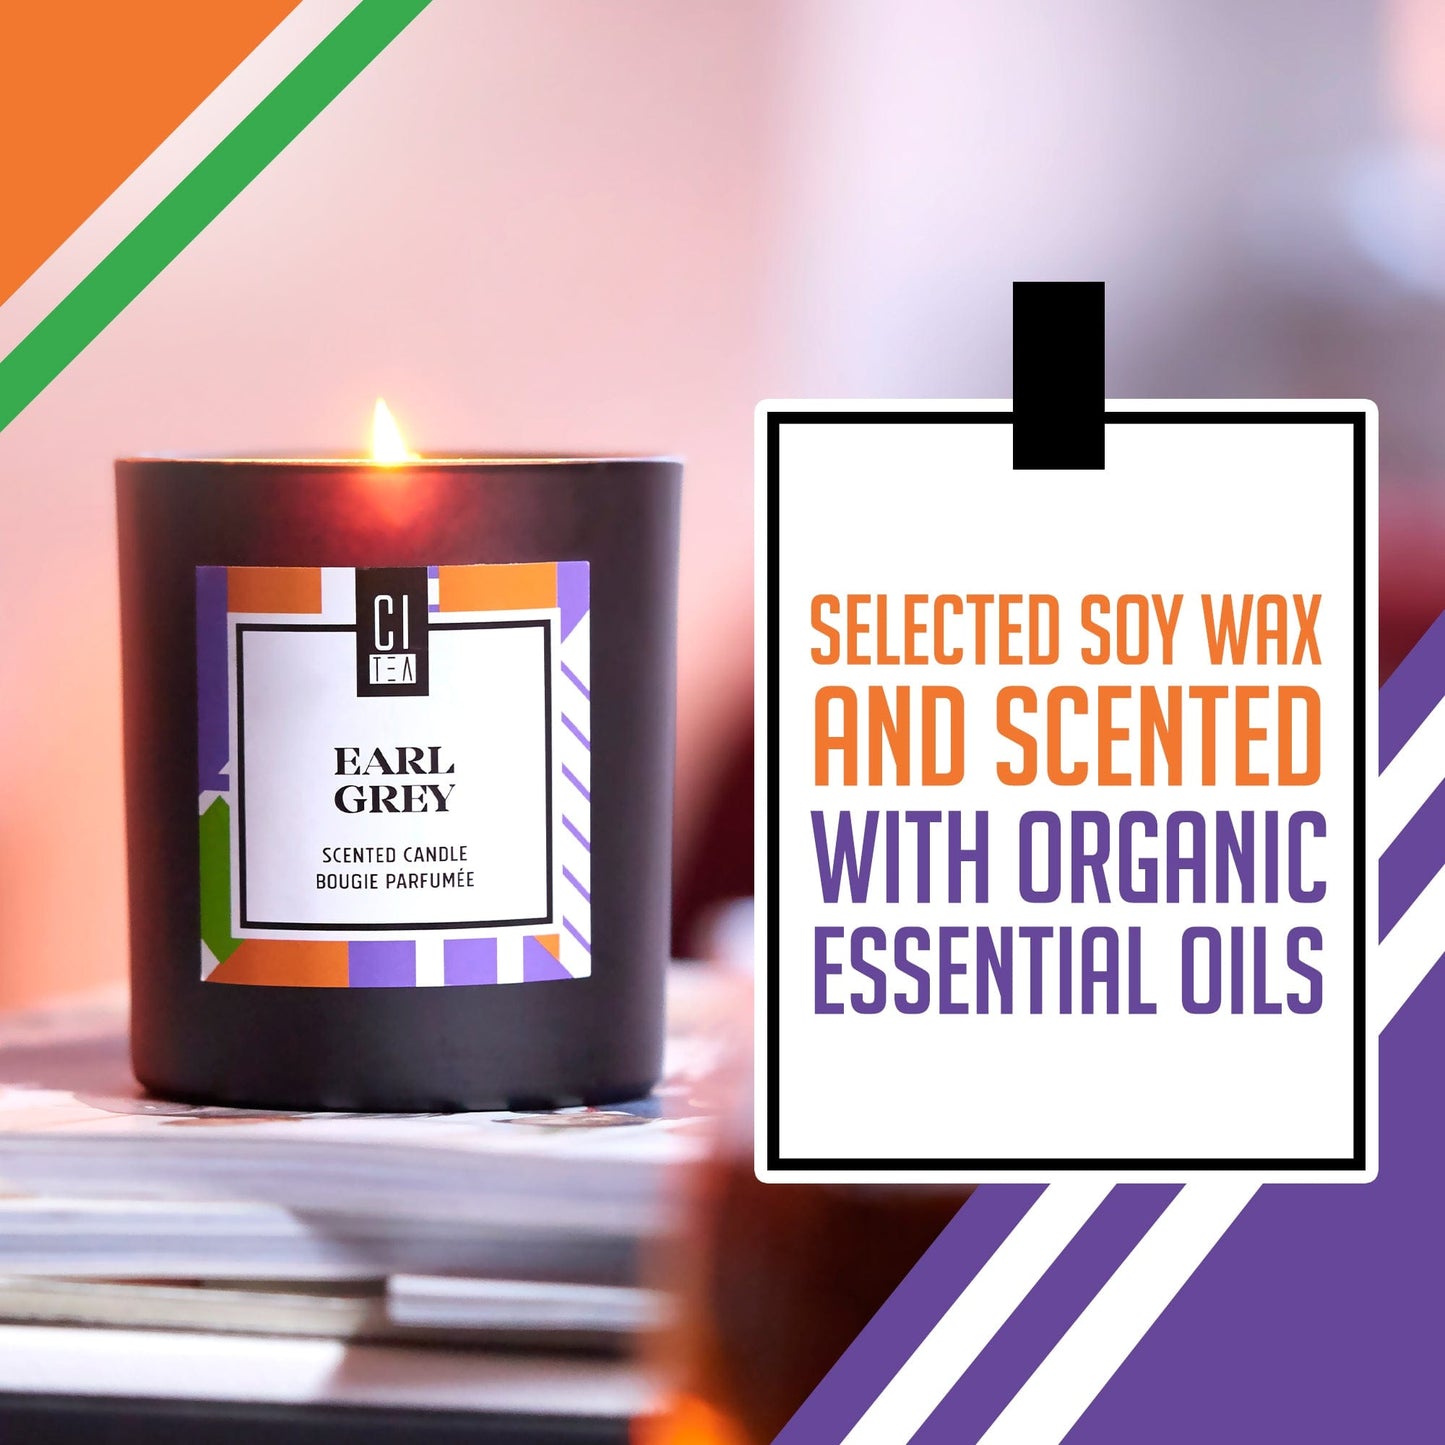 Earl Grey tea scent Soy Wax Candle - Bergamot & Rose - 8 oz